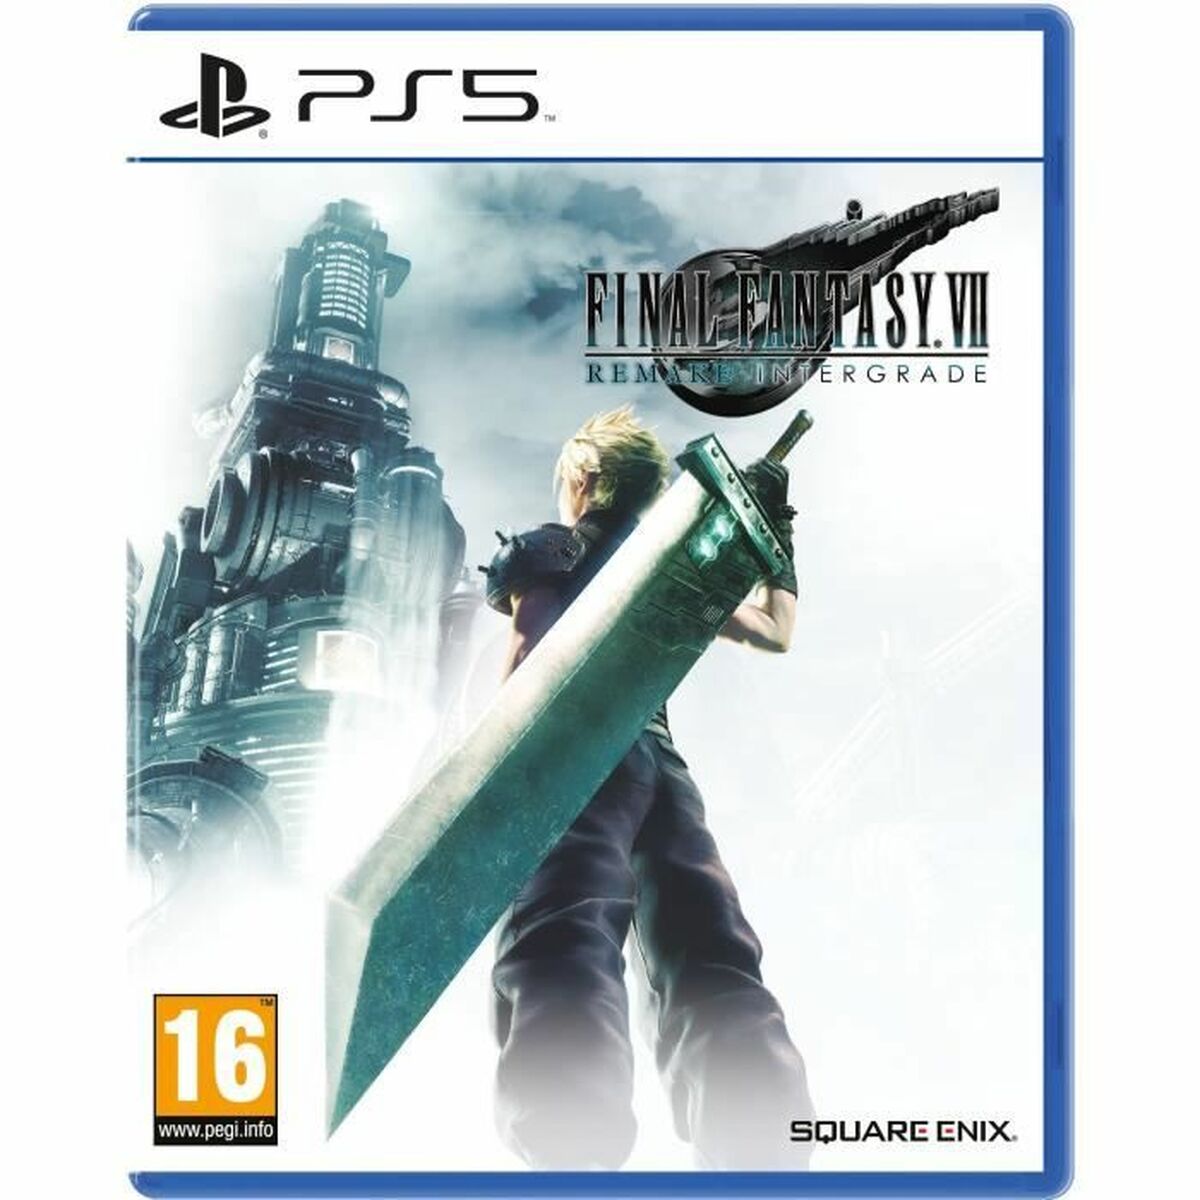 Jeu vidéo PlayStation 5 Square Enix Final Fantasy VII Remake Intergrade